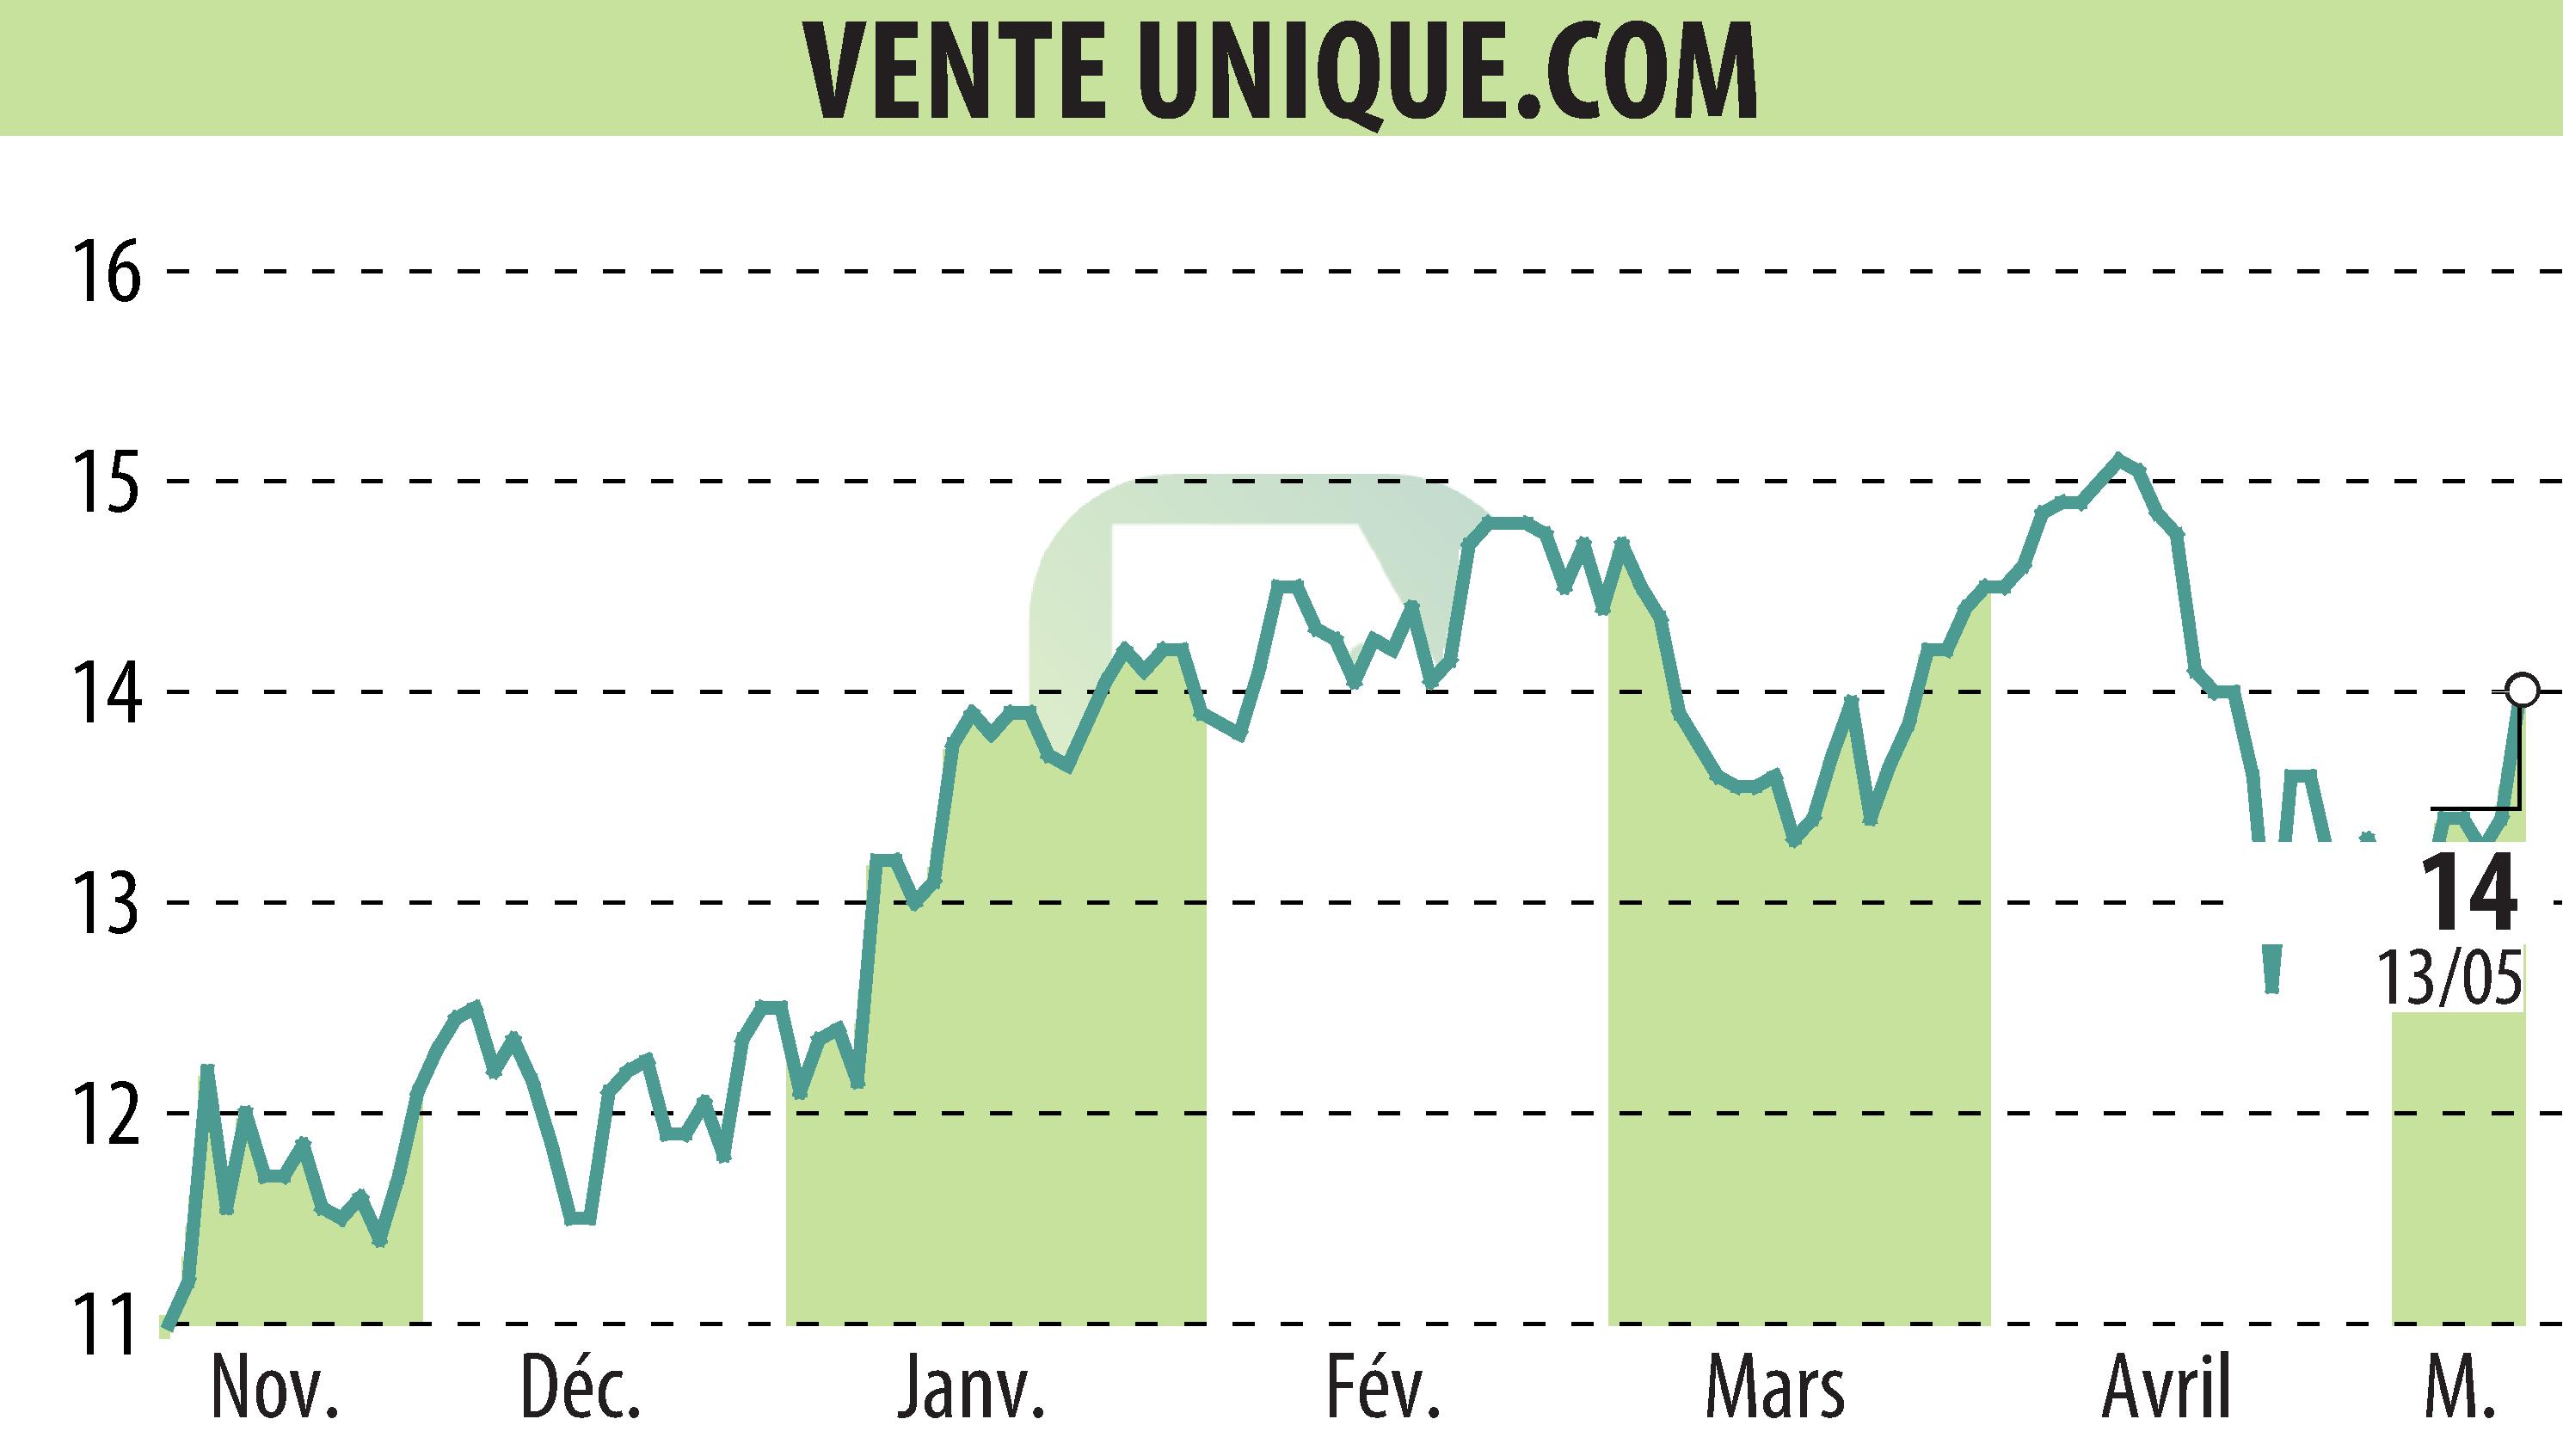 Stock price chart of VENTE UNIQUE.COM (EPA:ALVU) showing fluctuations.